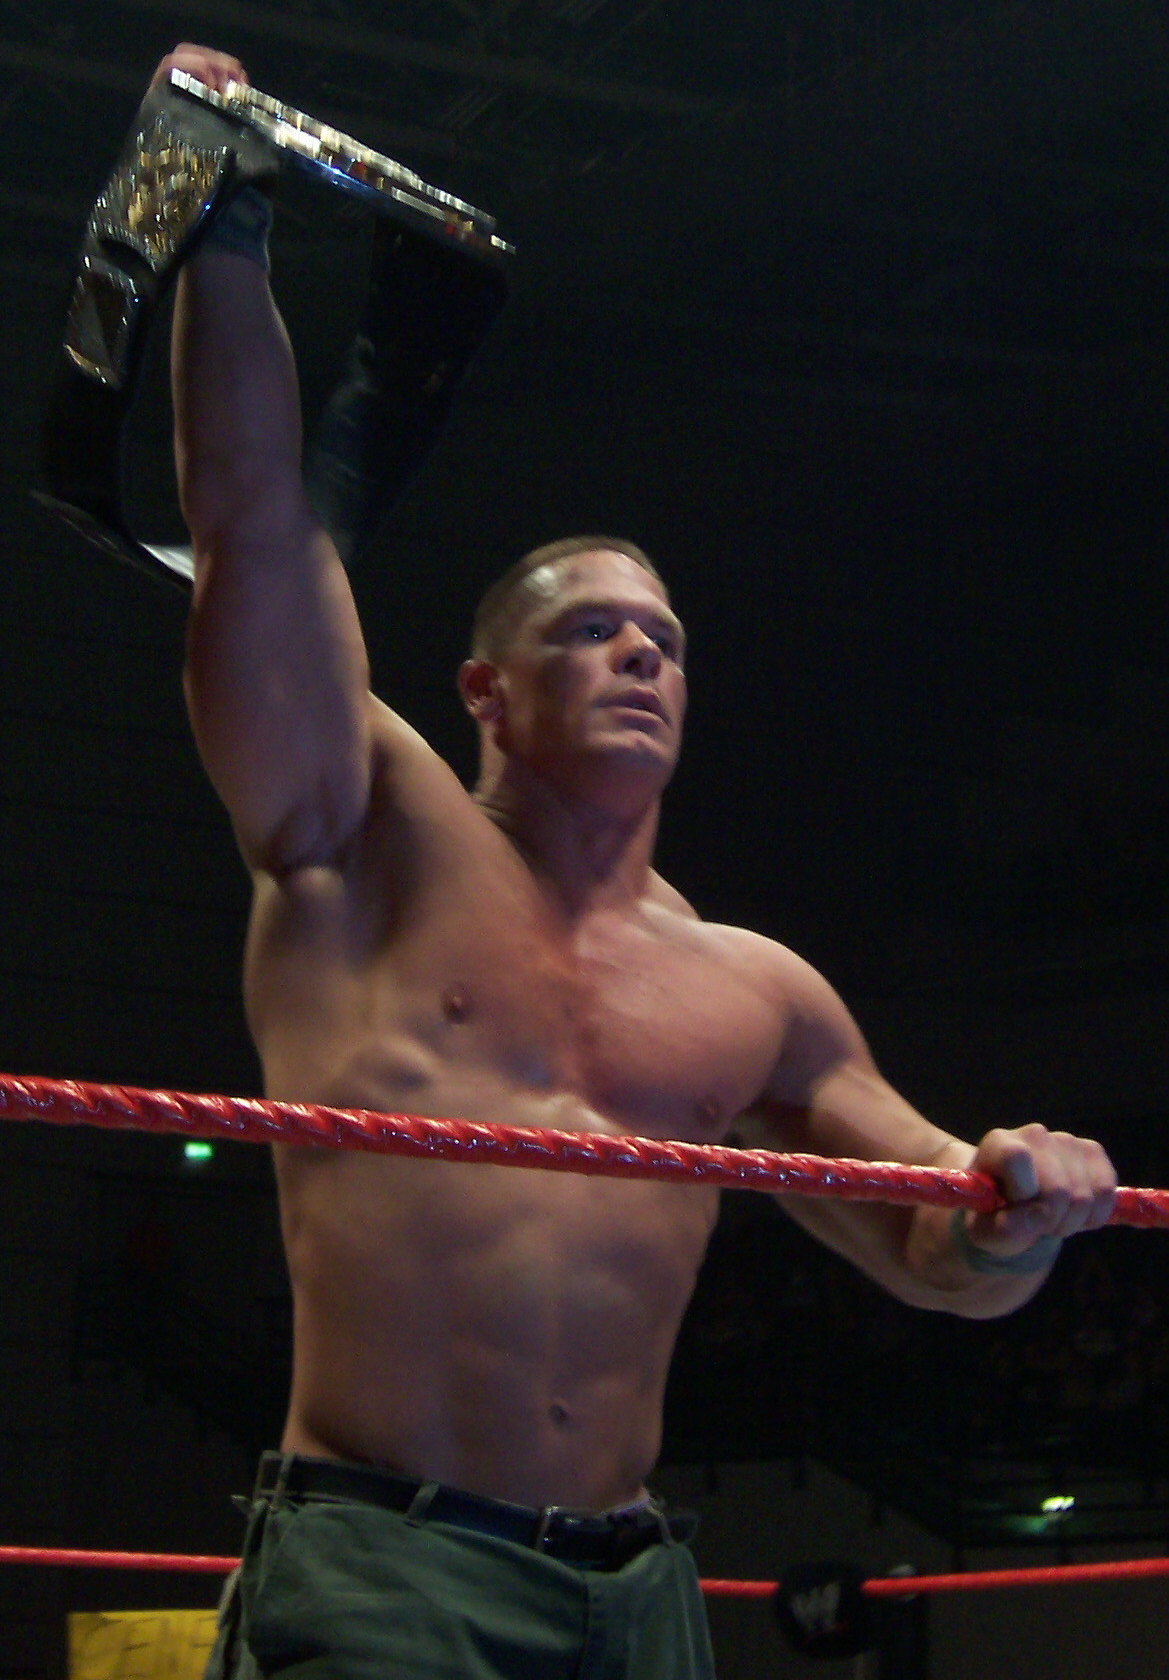 File:The Shield WWE.jpg - Wikipedia, the free encyclopedia